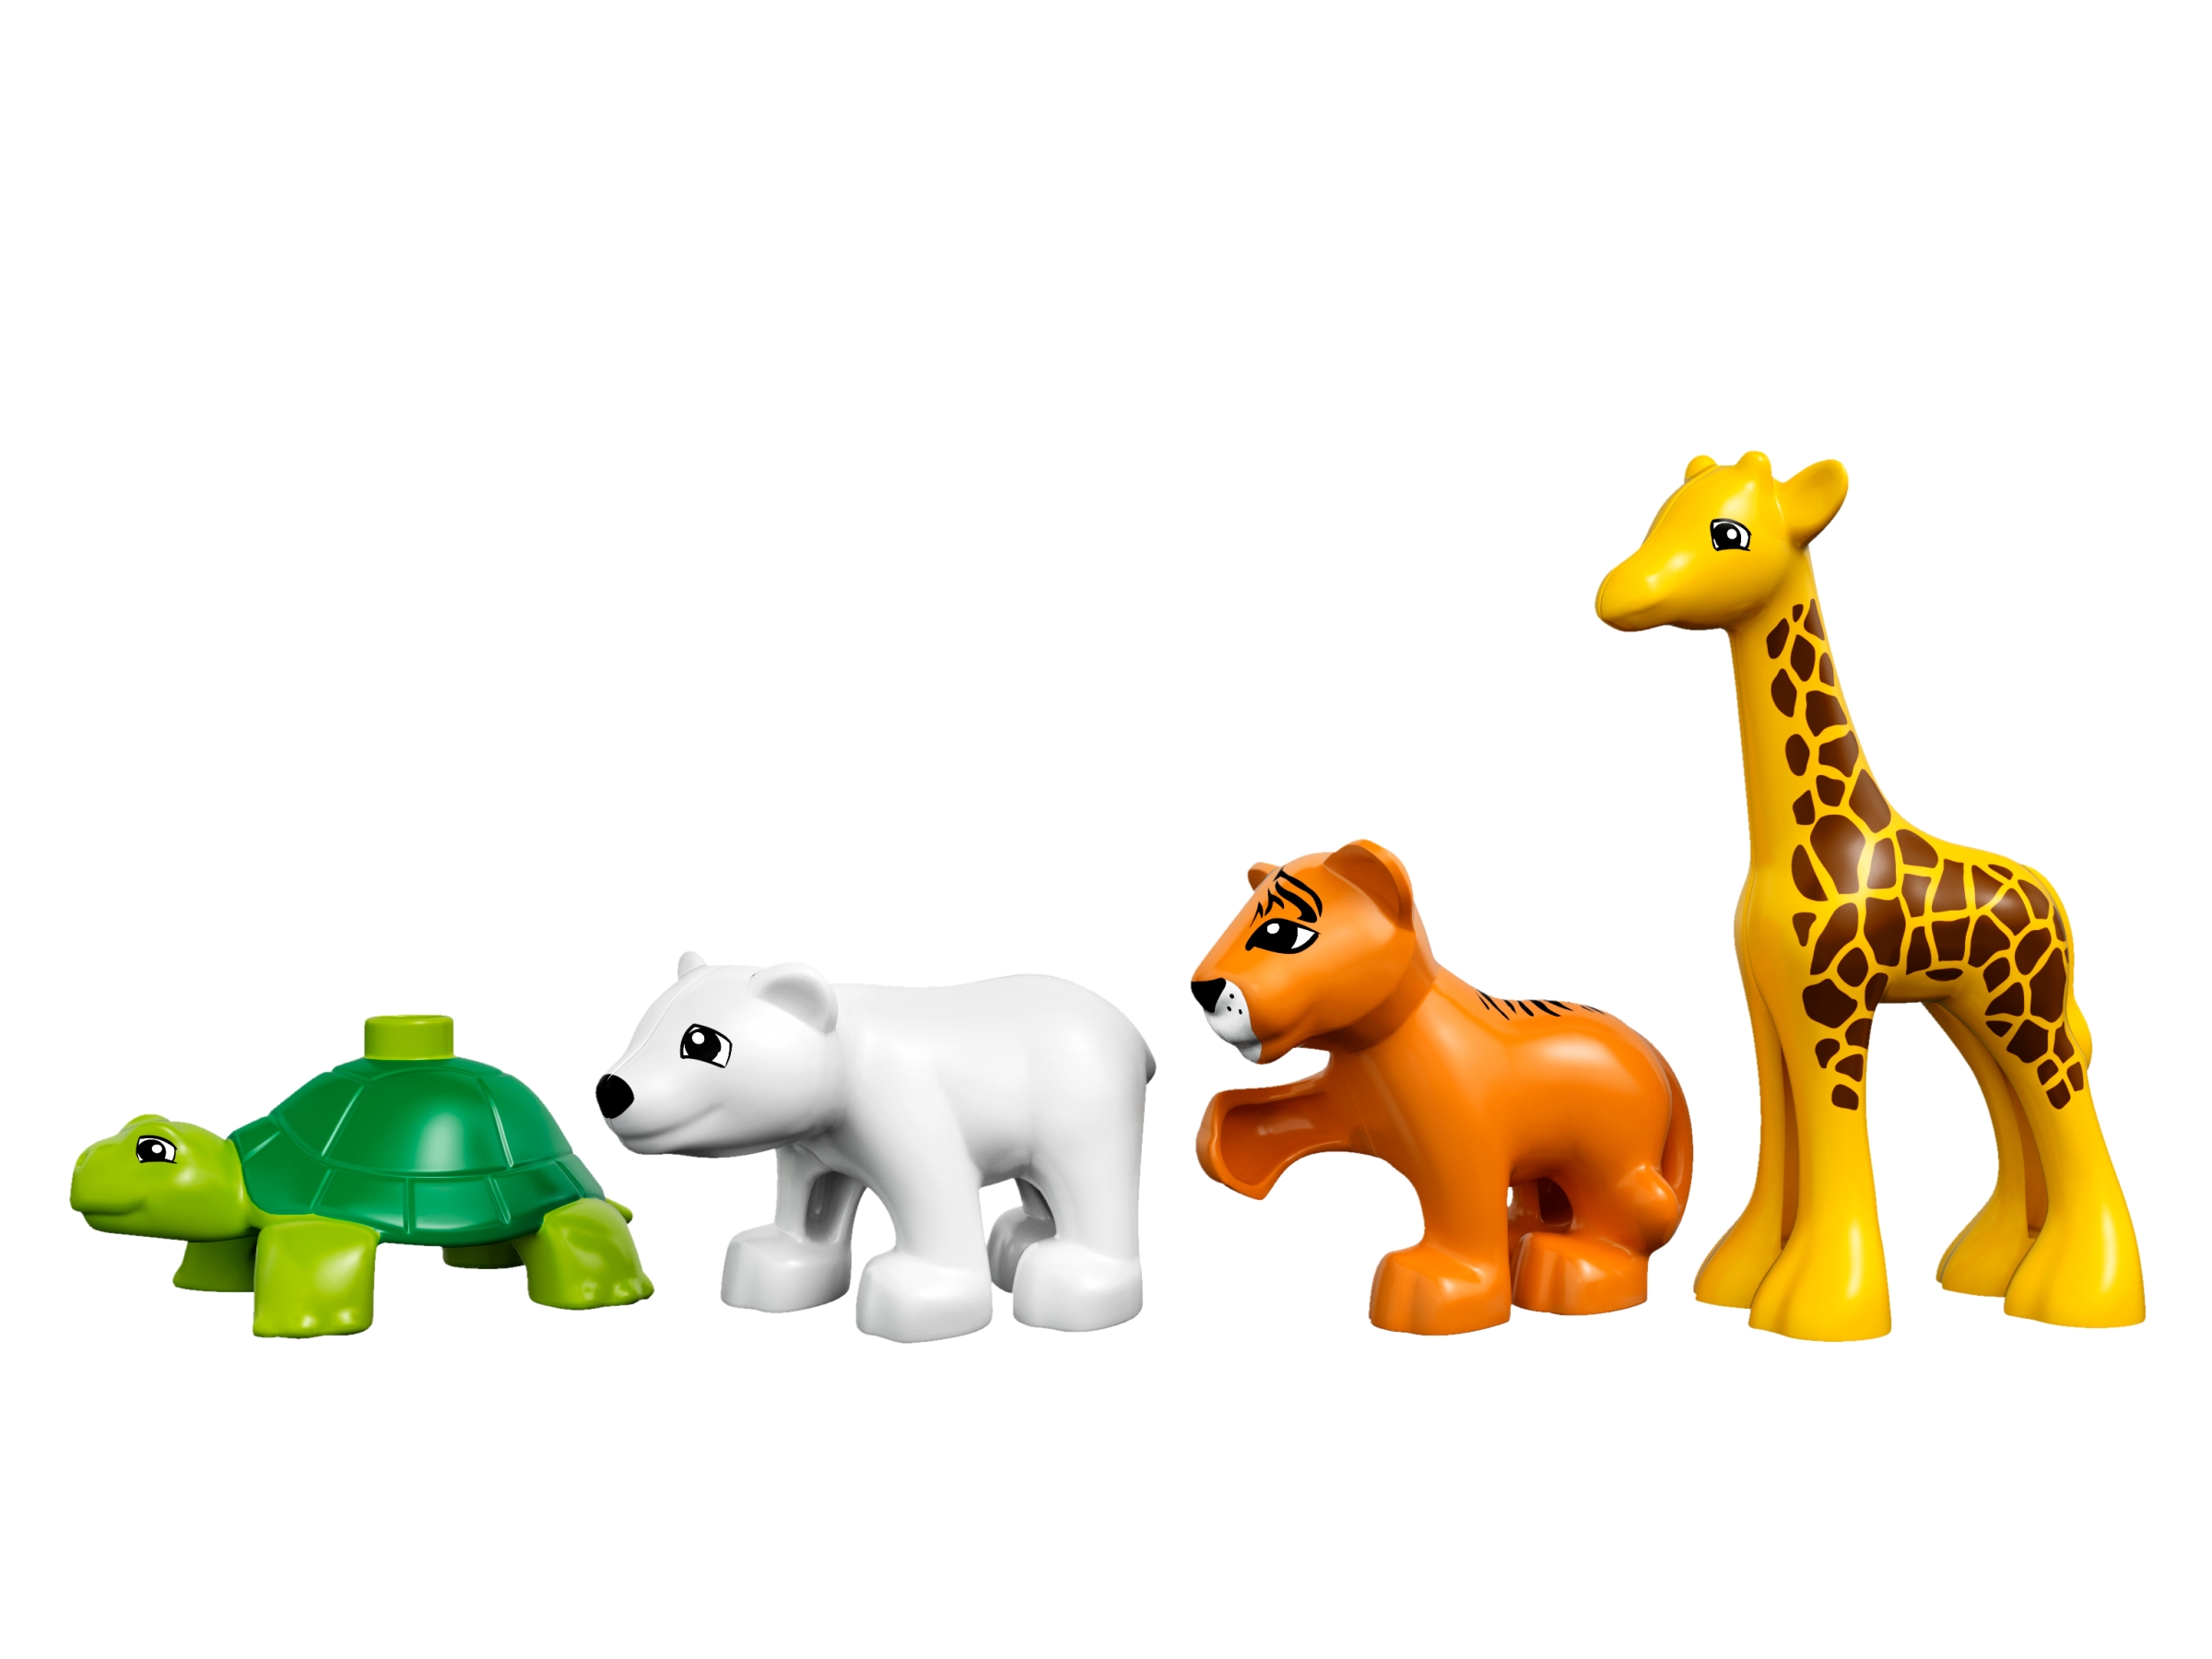 Details about   Lego Duplo Elephants Animals Adult Baby Umbrella Zoo Safari Lot Set 